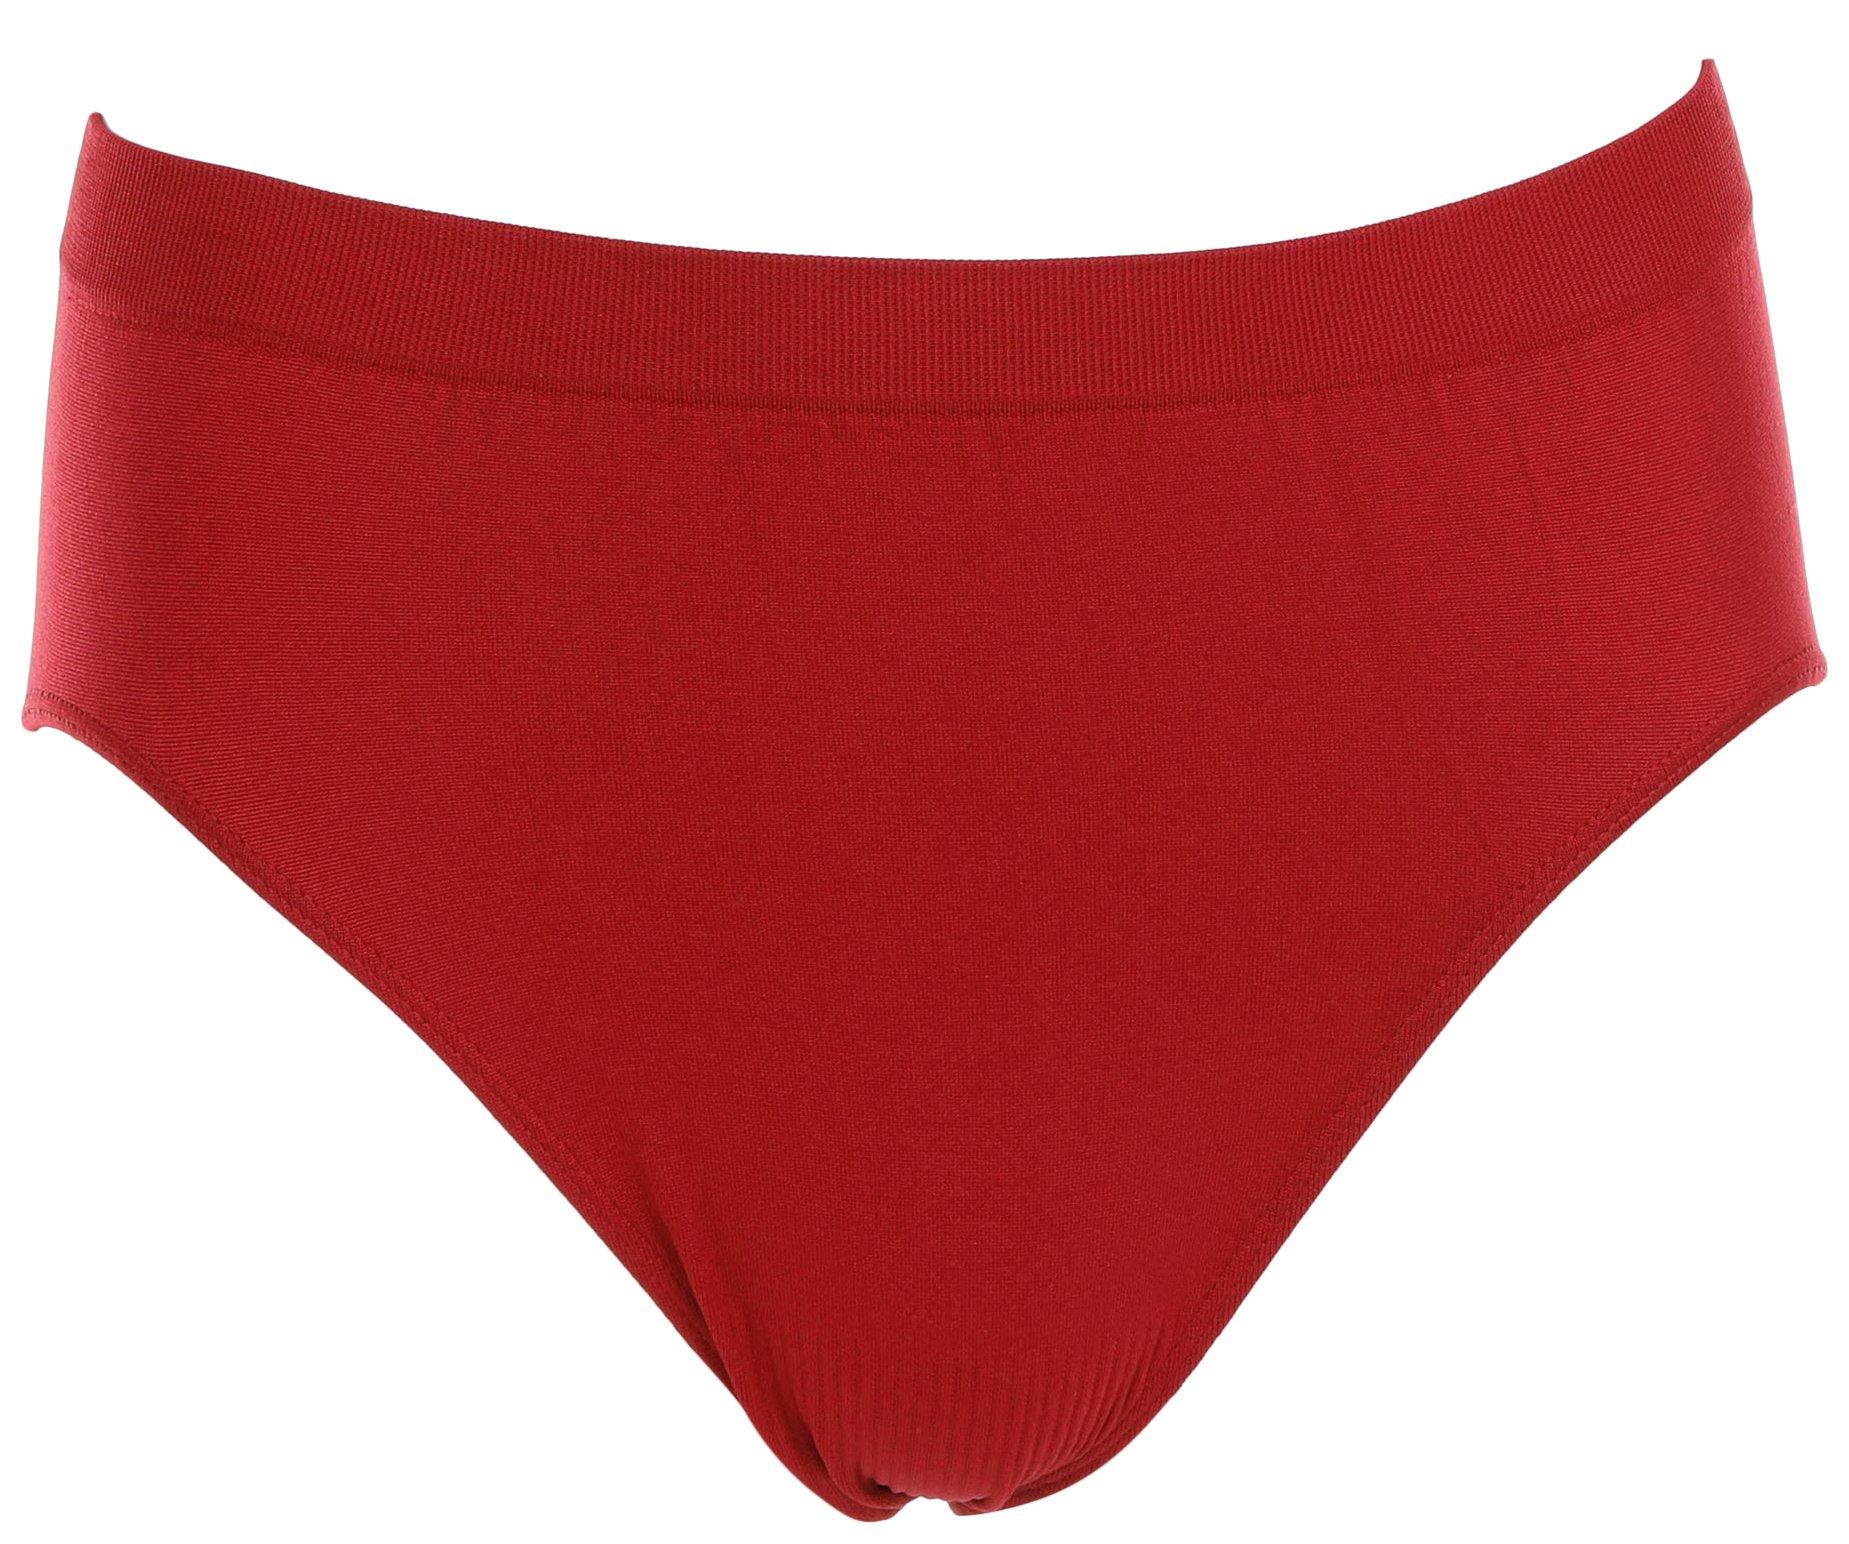 NWT JOCKEY French Cut Elance Supersoft Panties 002071/586 Size 6 3